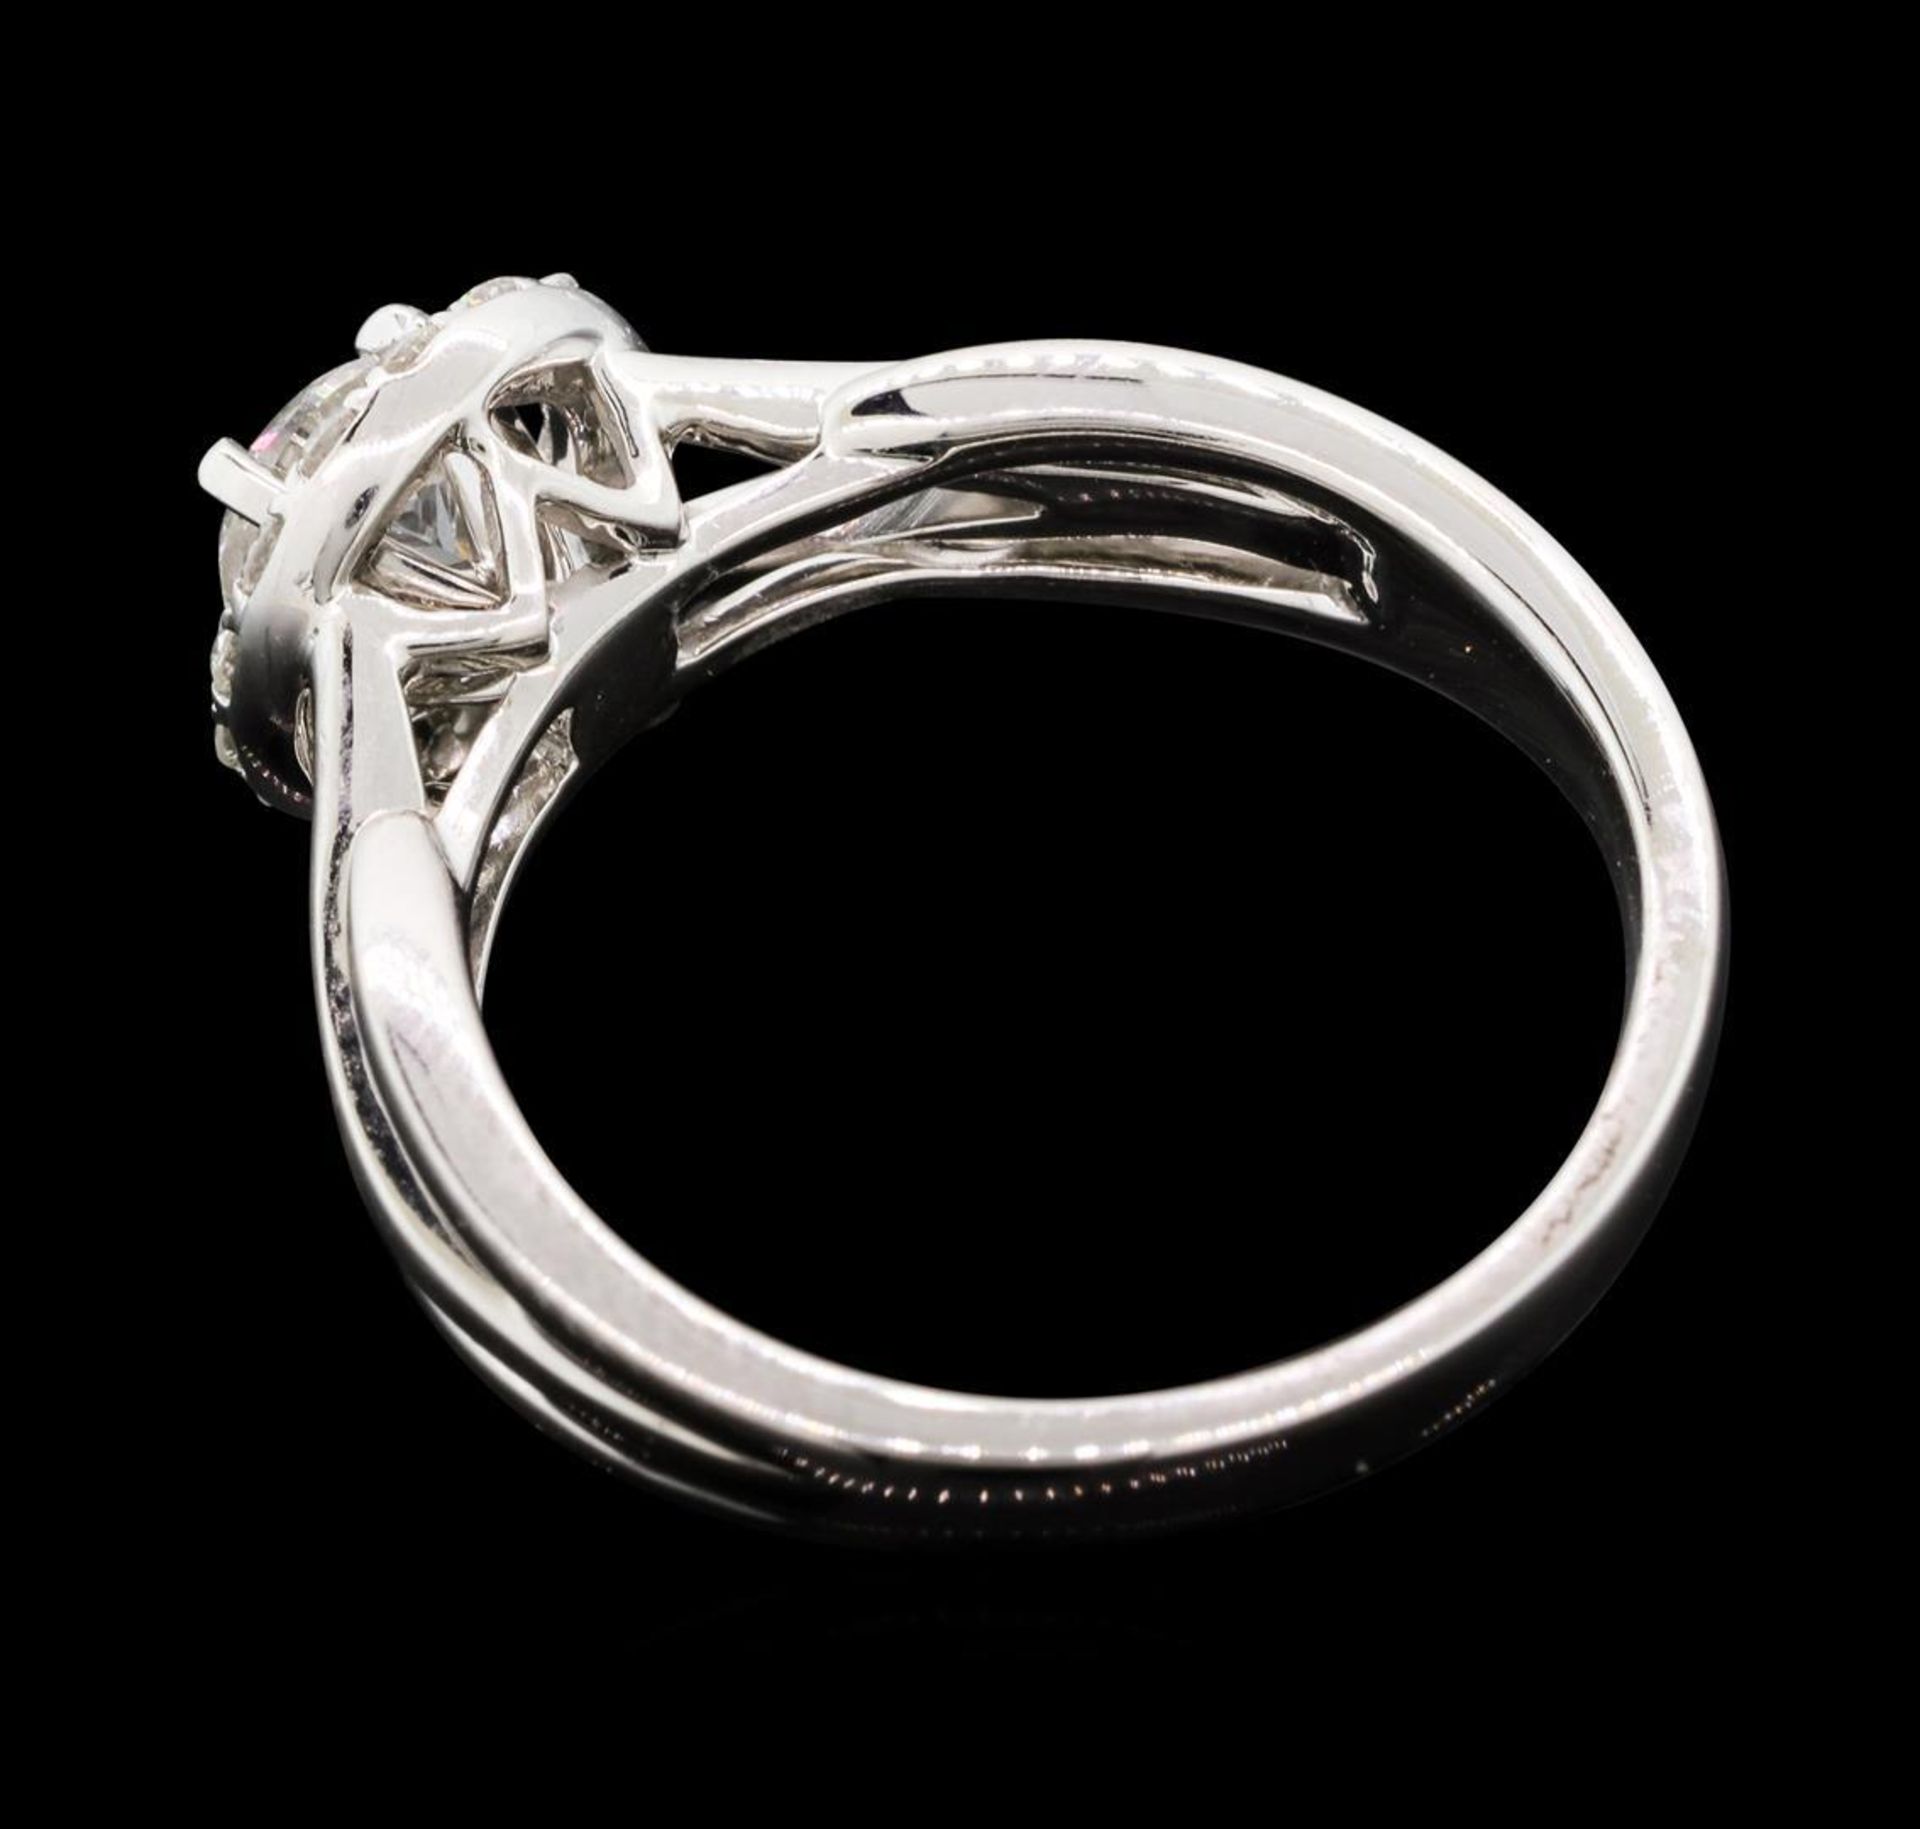 0.74 ctw Diamond Ring - 14KT White Gold - Image 3 of 5